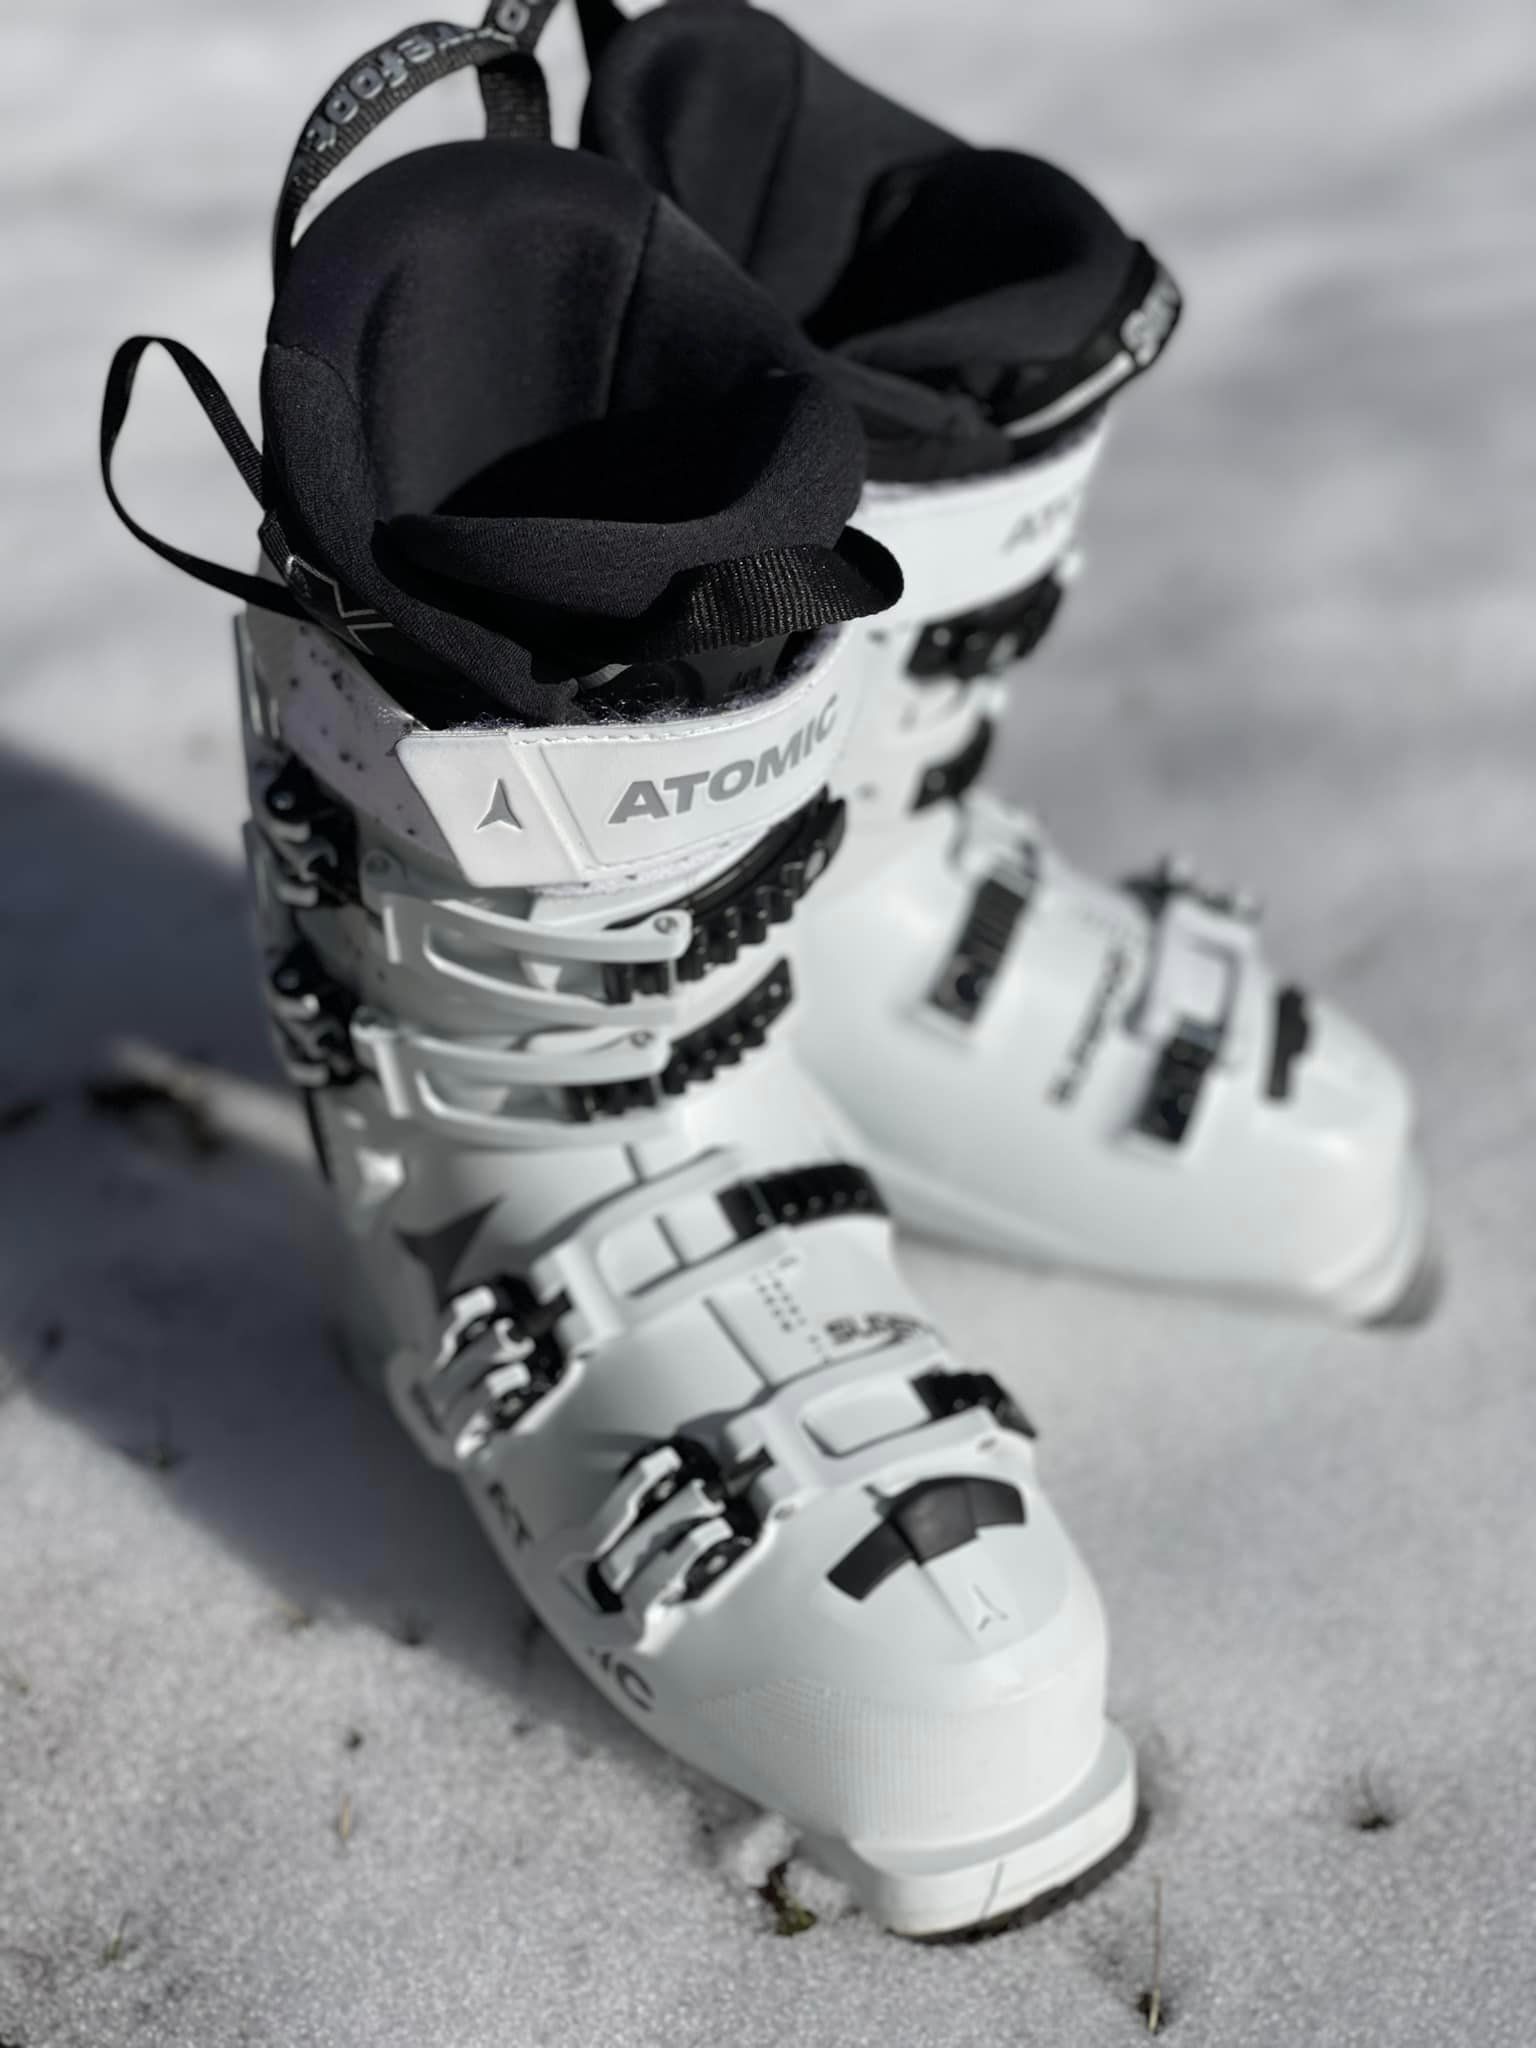 【瑞士滑雪】surefoot skiboots內靴訂製